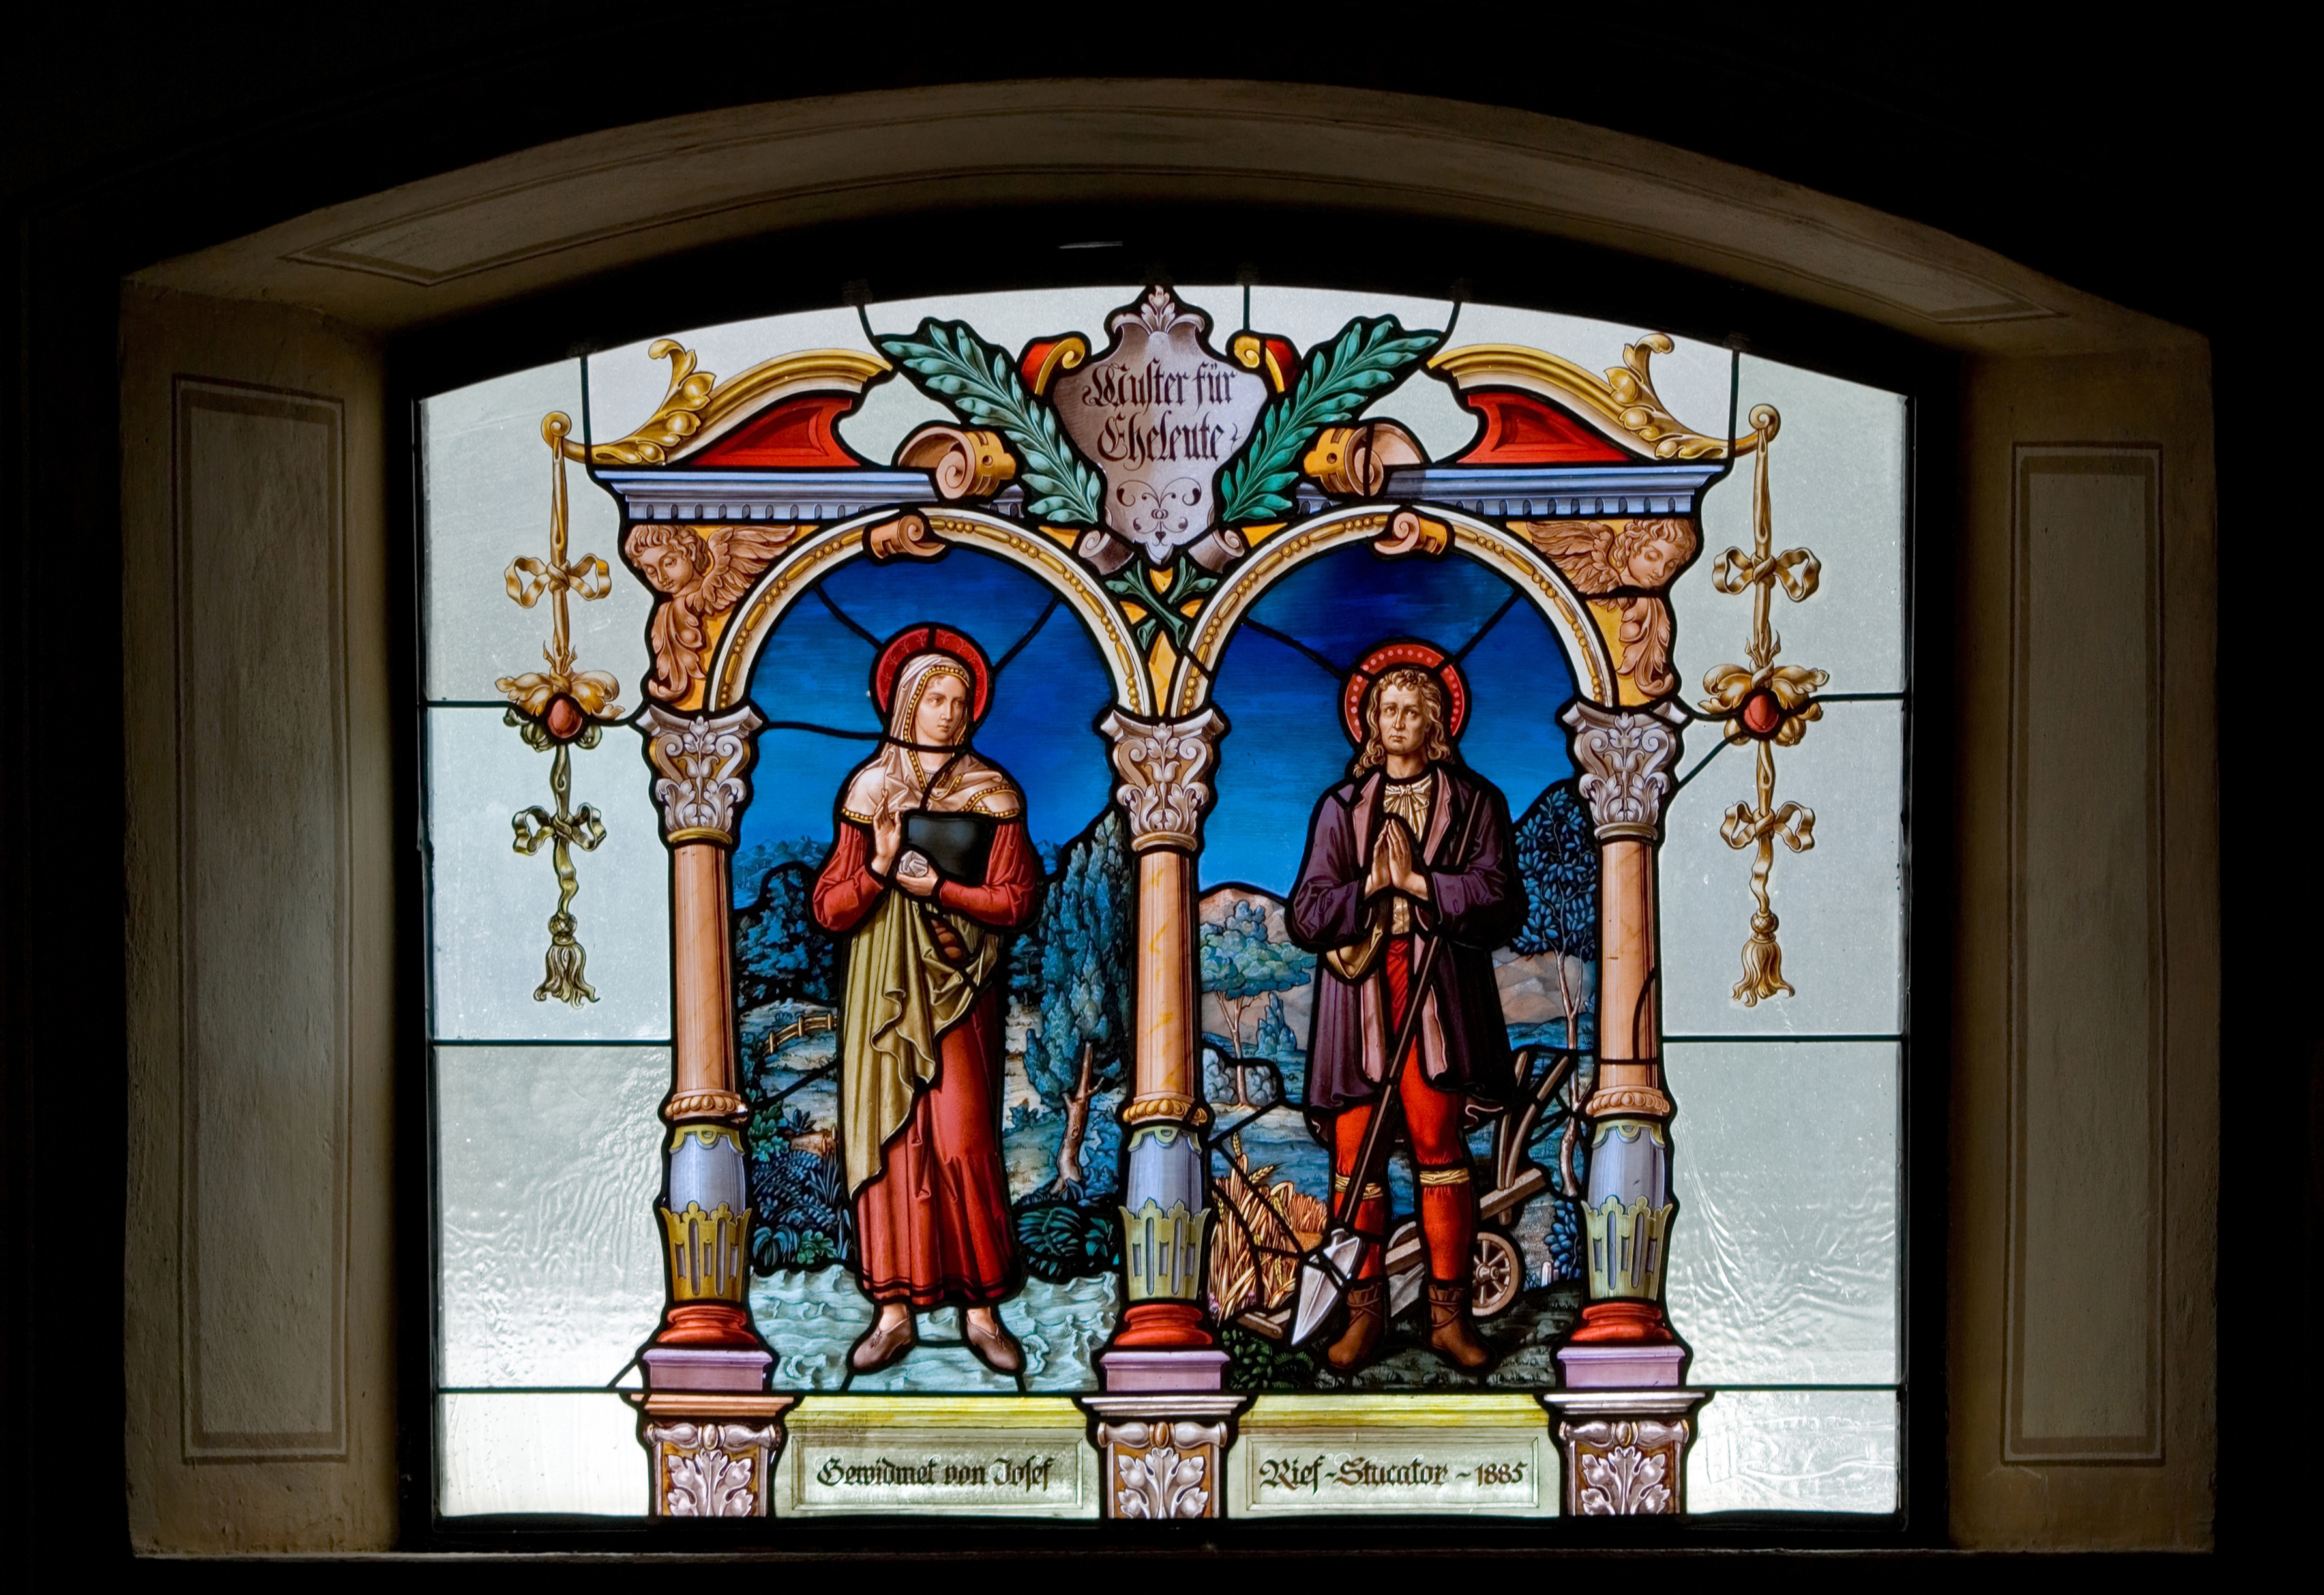 Muster für Eheleute in der Pfarrkirche Mariä Himmelfahrt, Nesselwängle